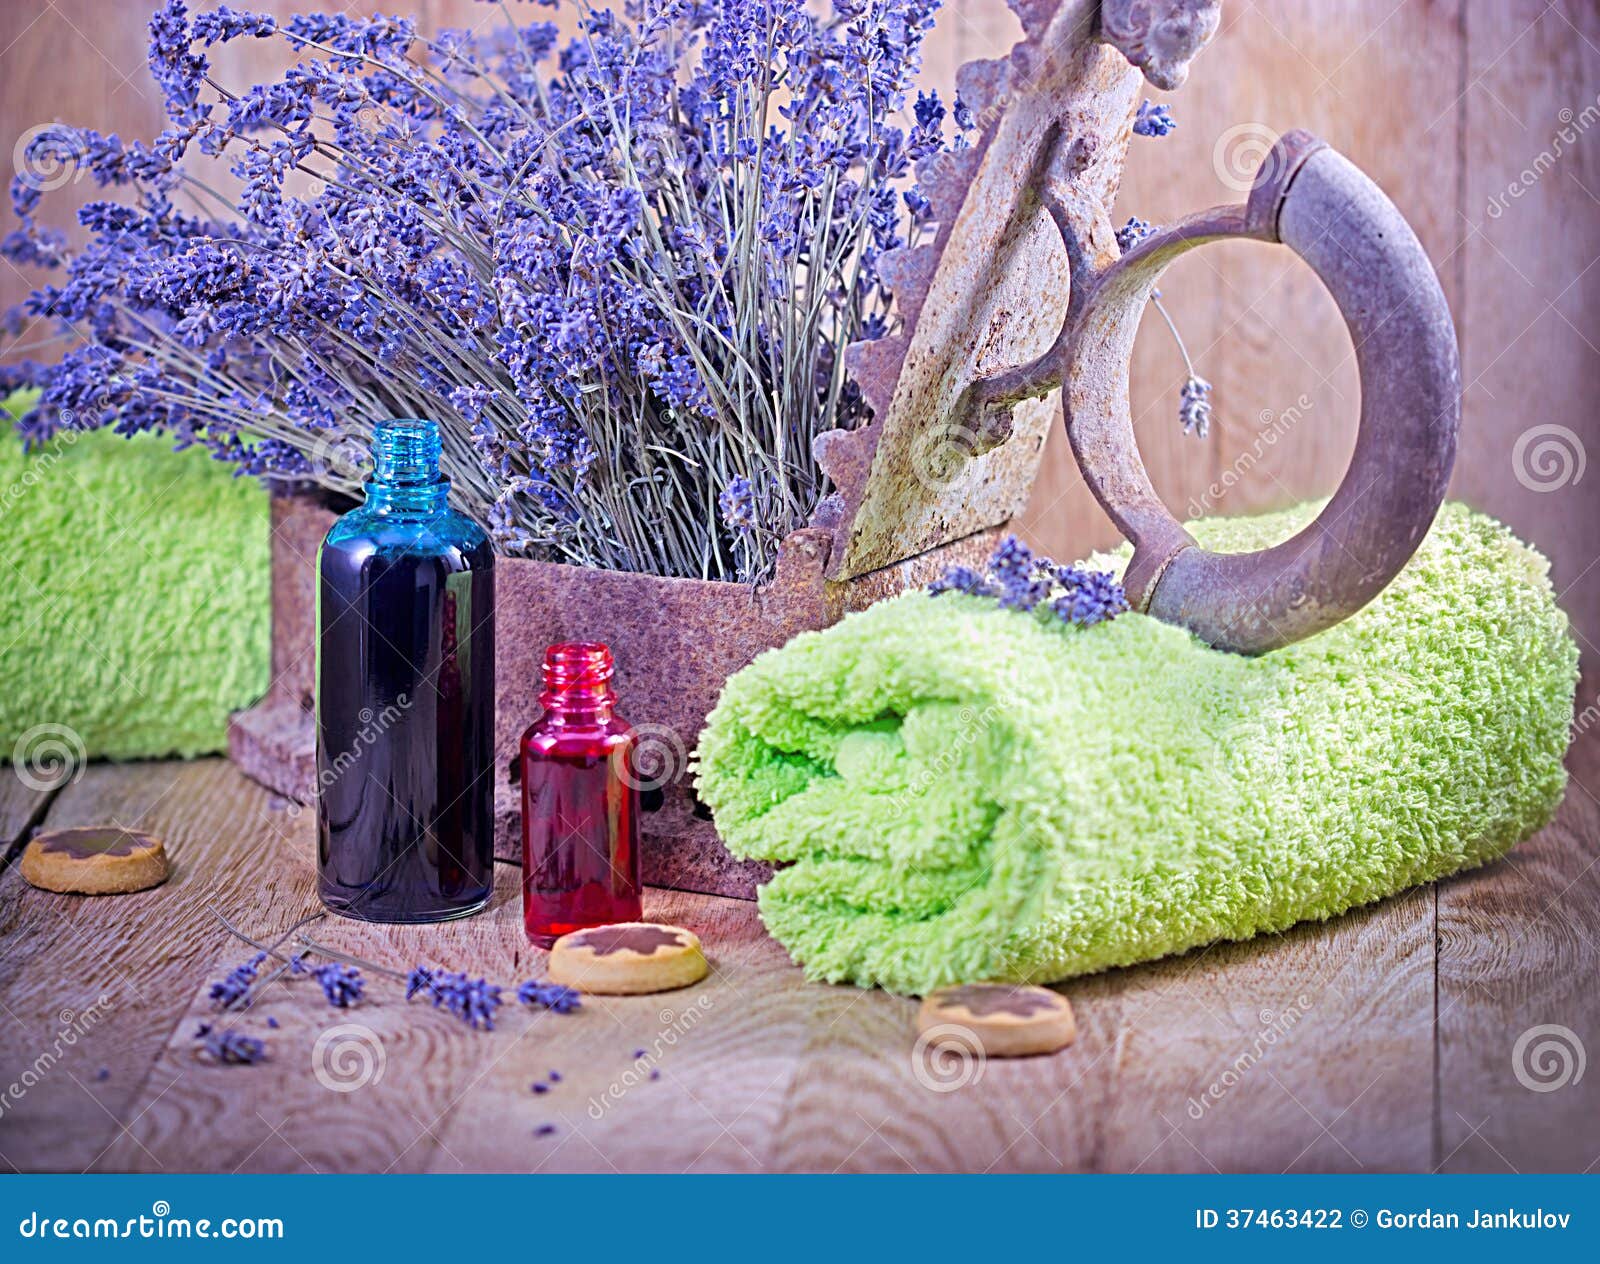 lavender oil (aromatic oil) and lavender